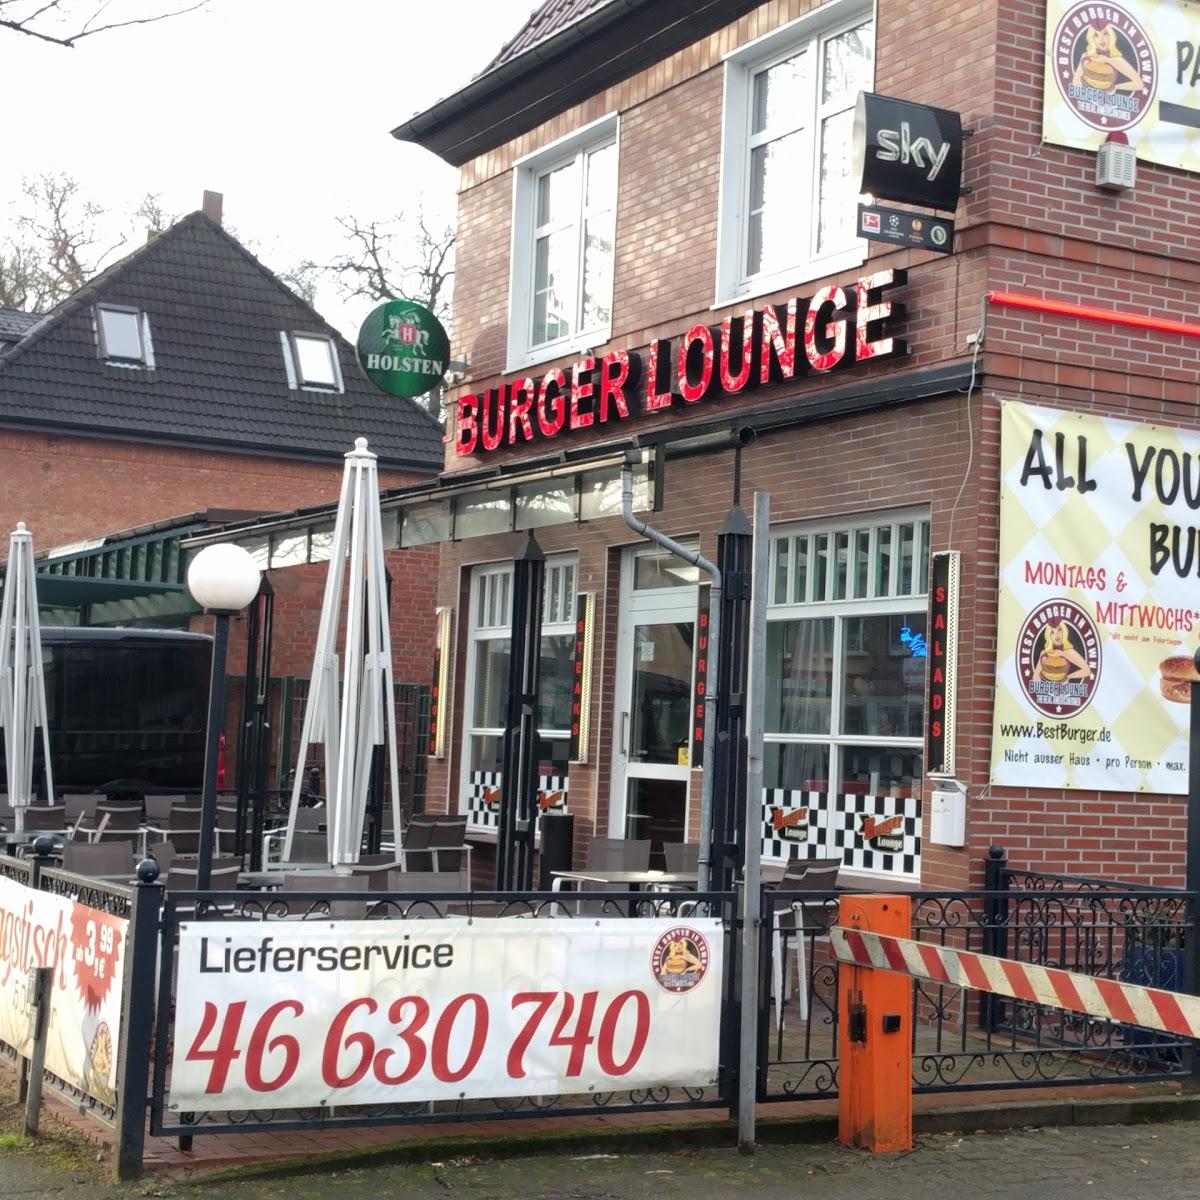 Restaurant "Burger Lounge" in Hamburg